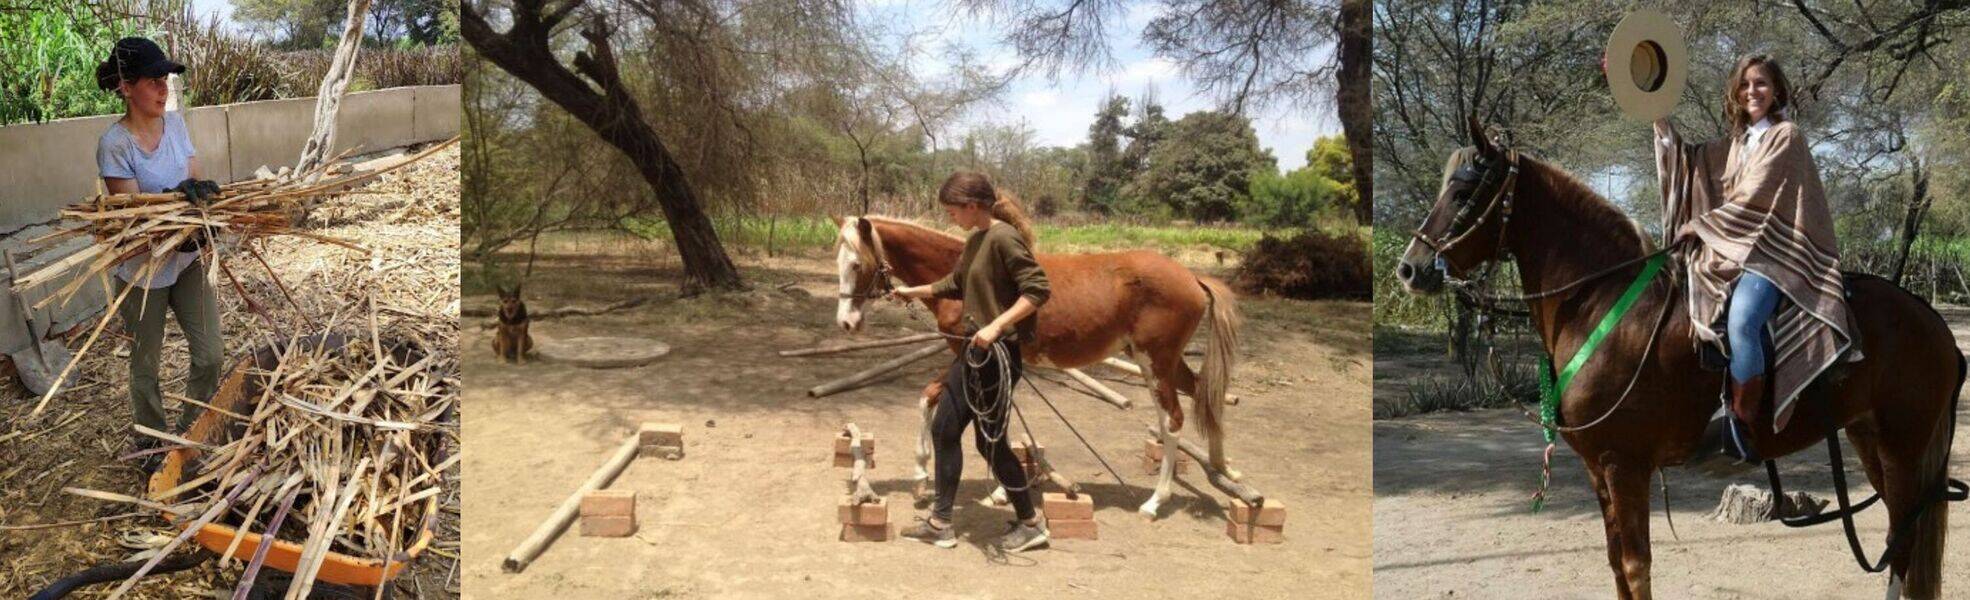 Volunteering at horse farm in Peru